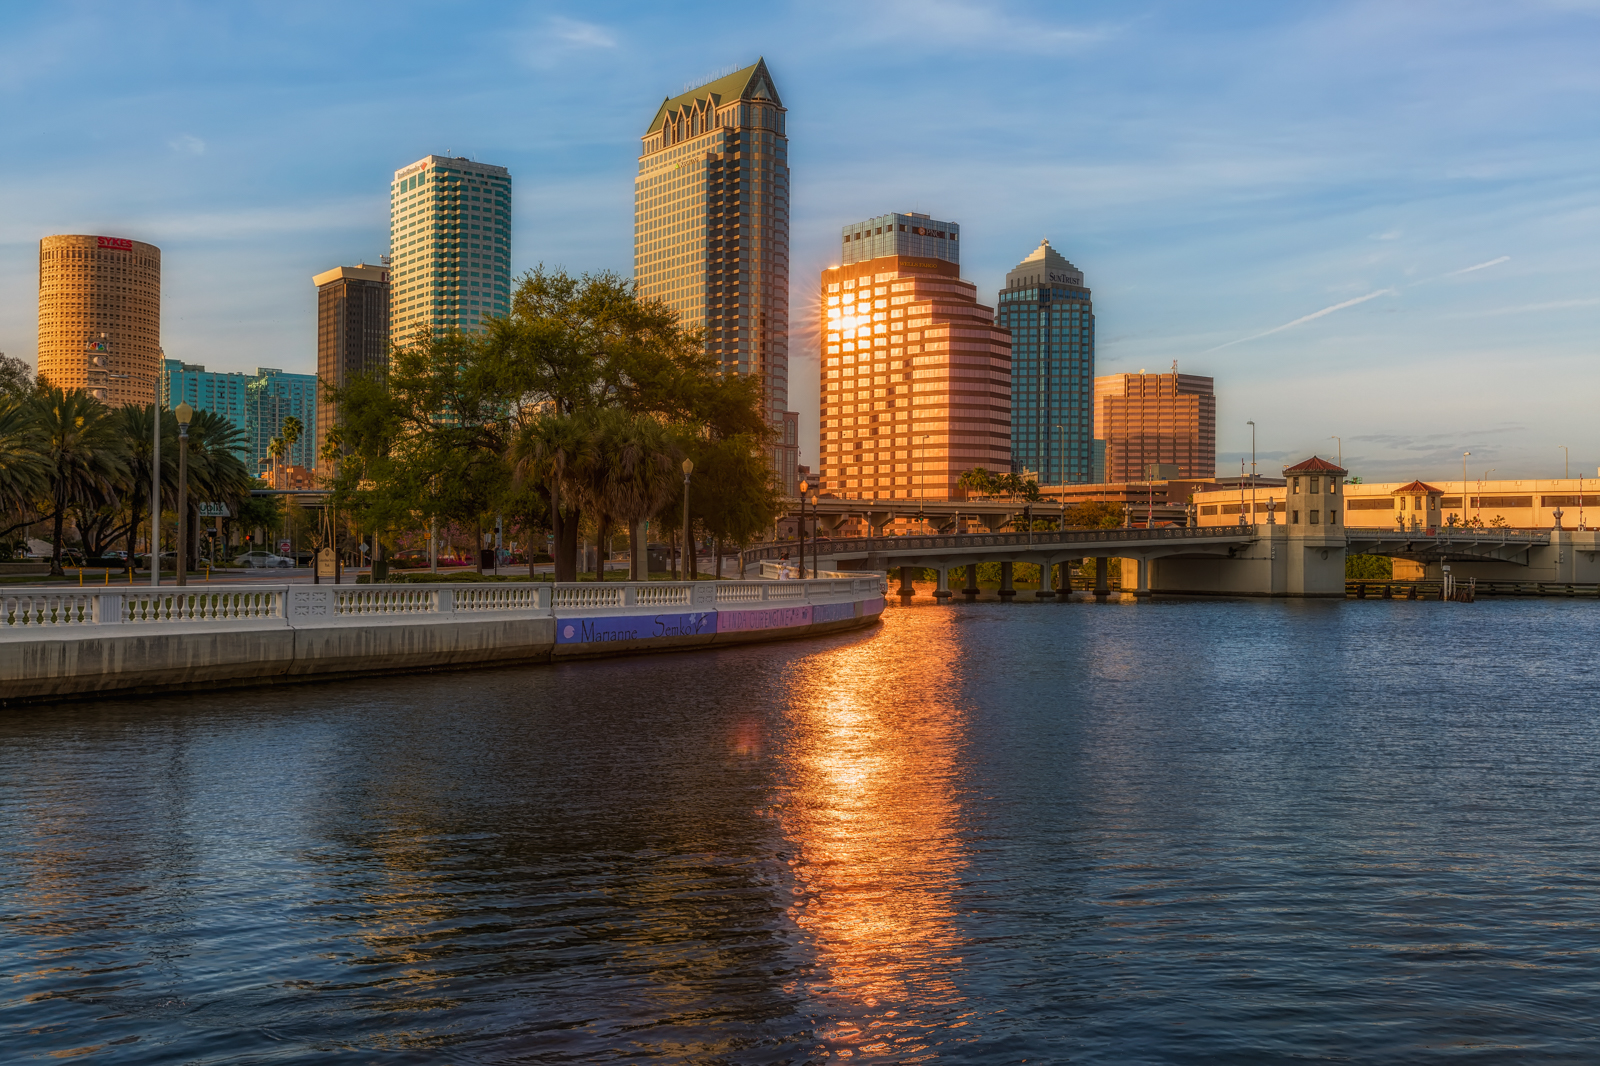 Bayshore leading to Downtown Tampa, Tampa, Florida